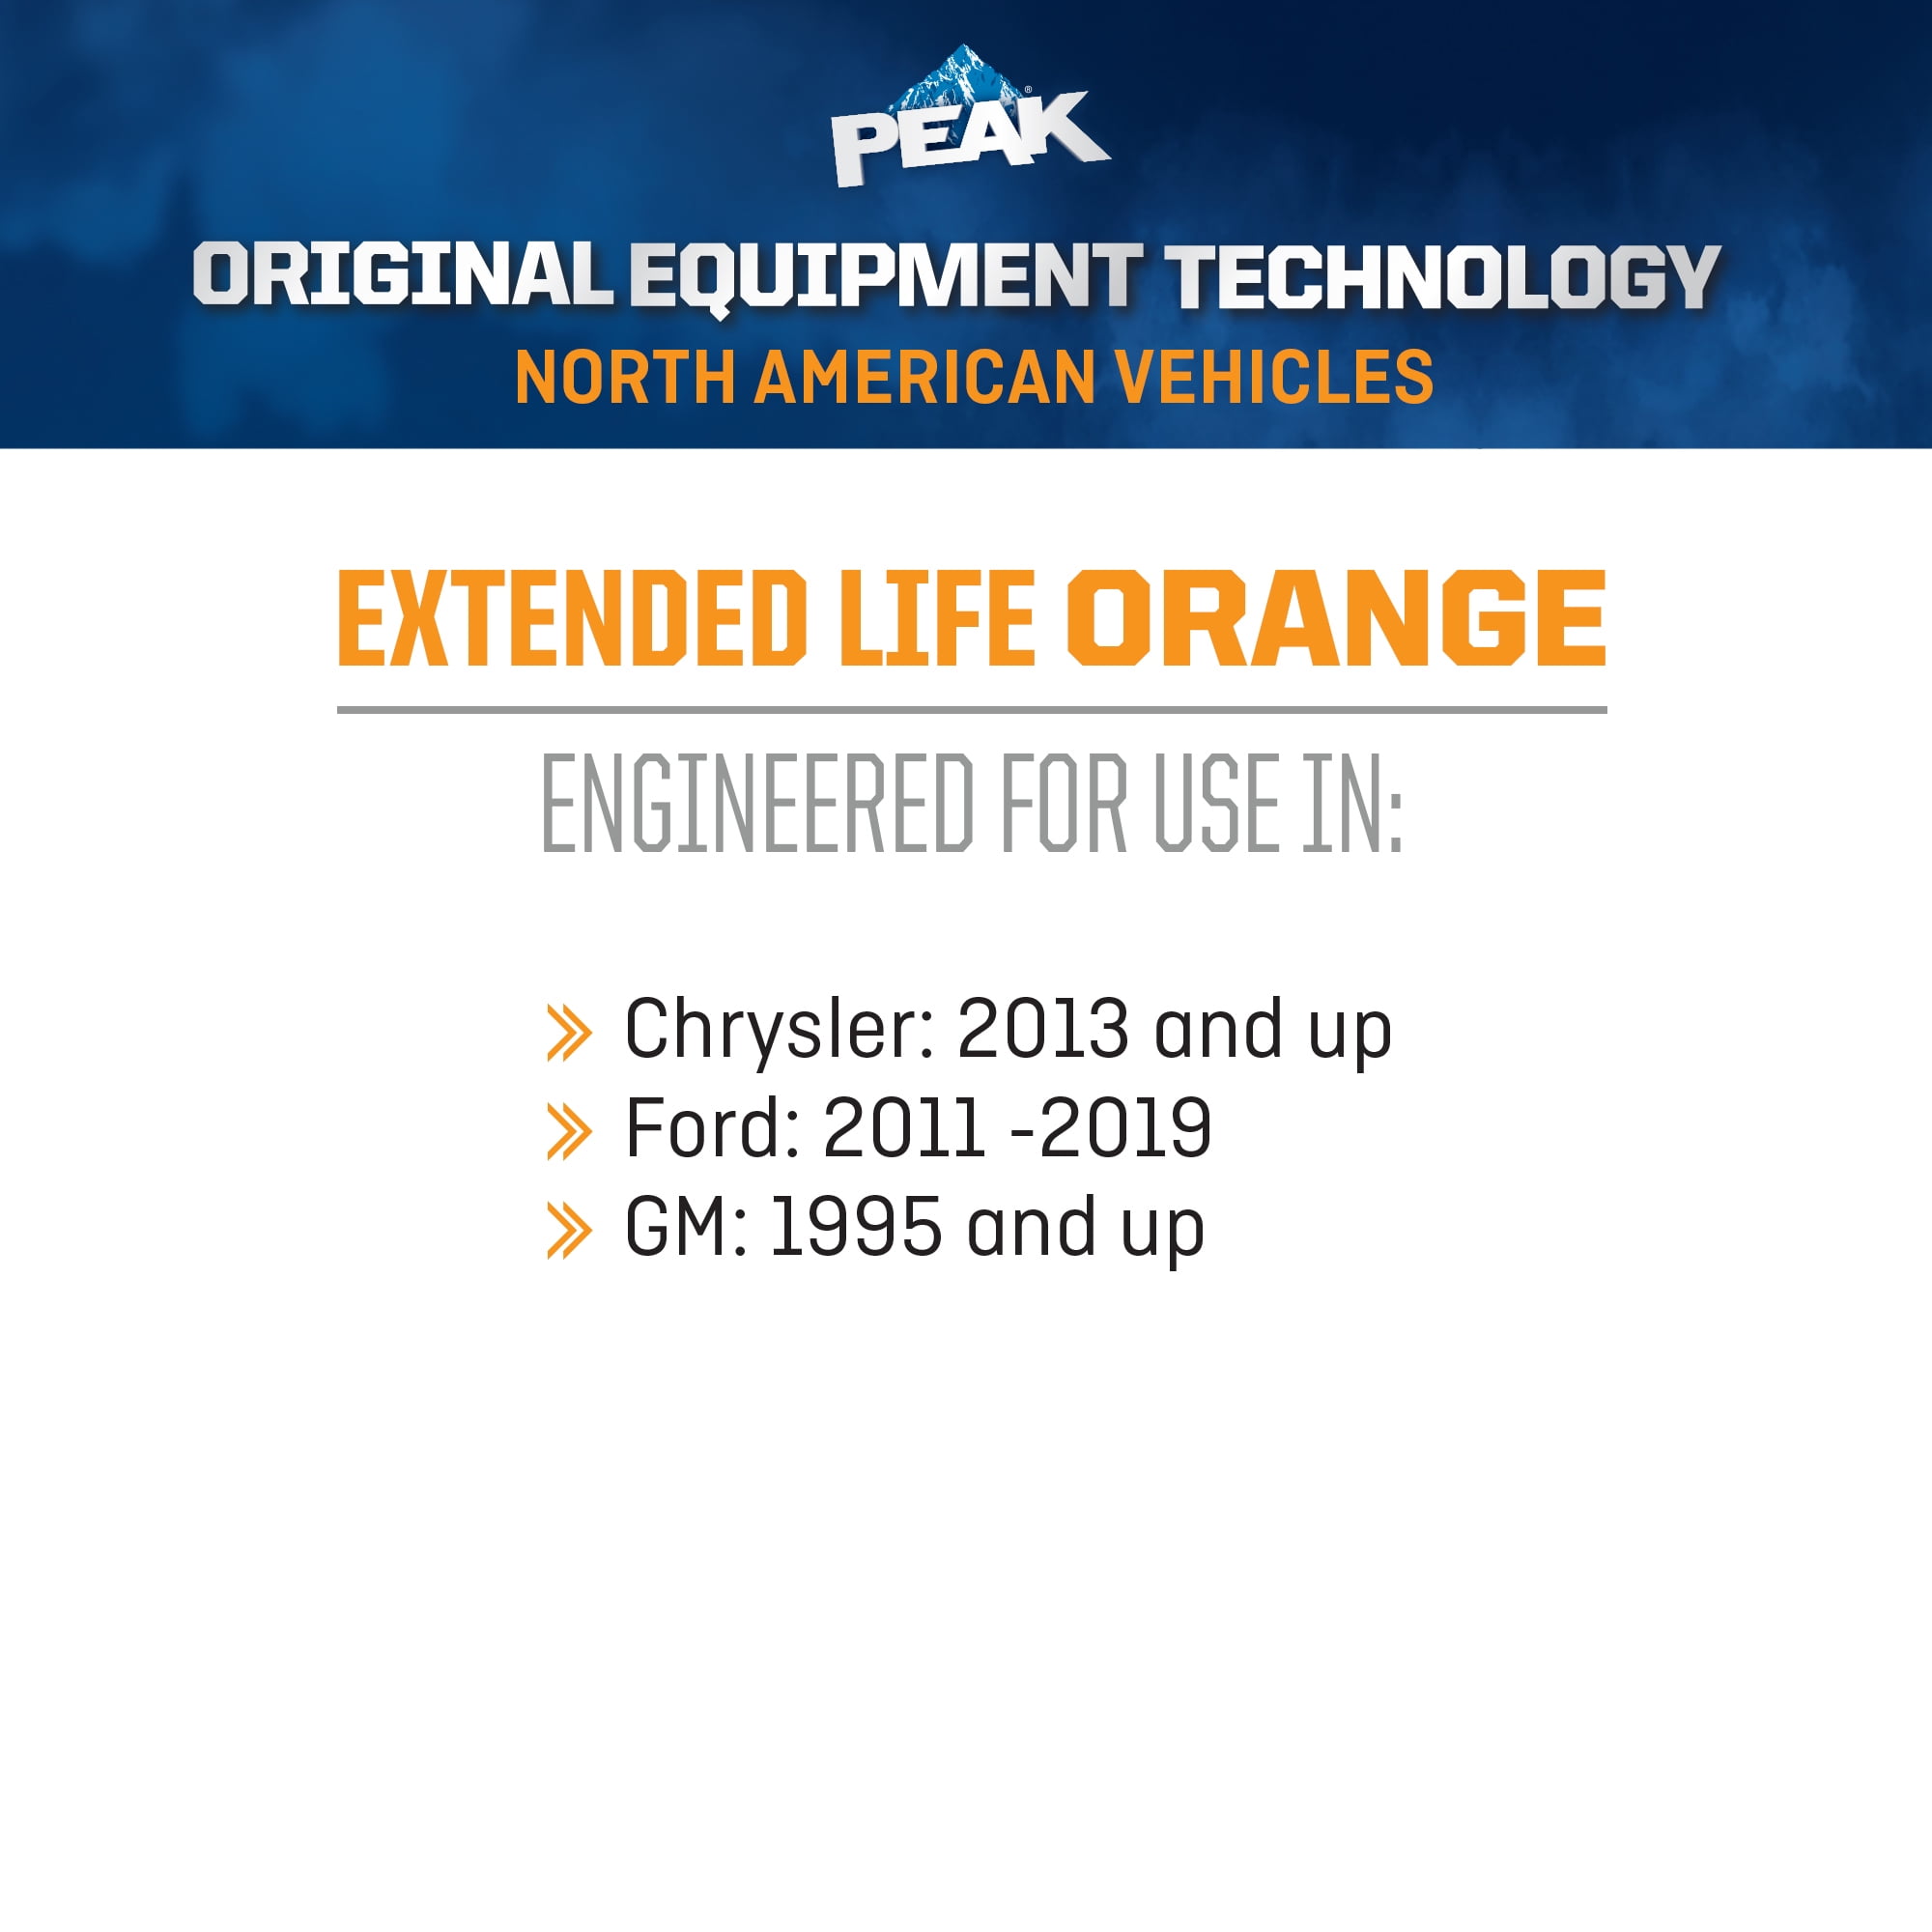 Peak 1 Gallon Orange 50/50 Antifreeze/Coolant PHOB53